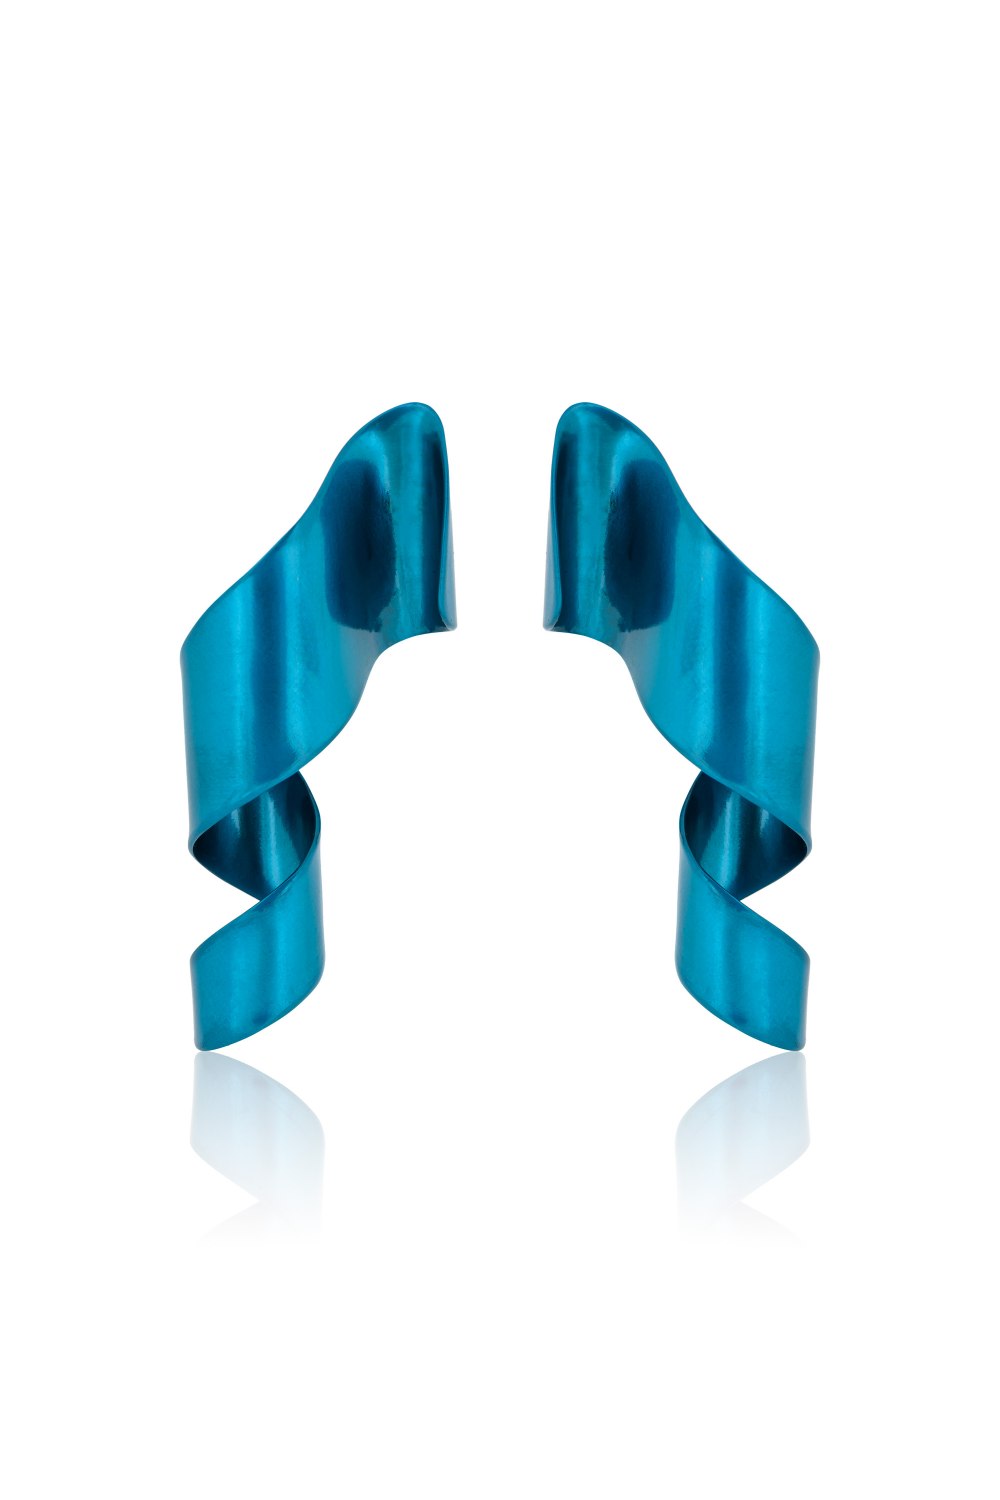 Cosmic Feather Turquoise Titanium Earrings